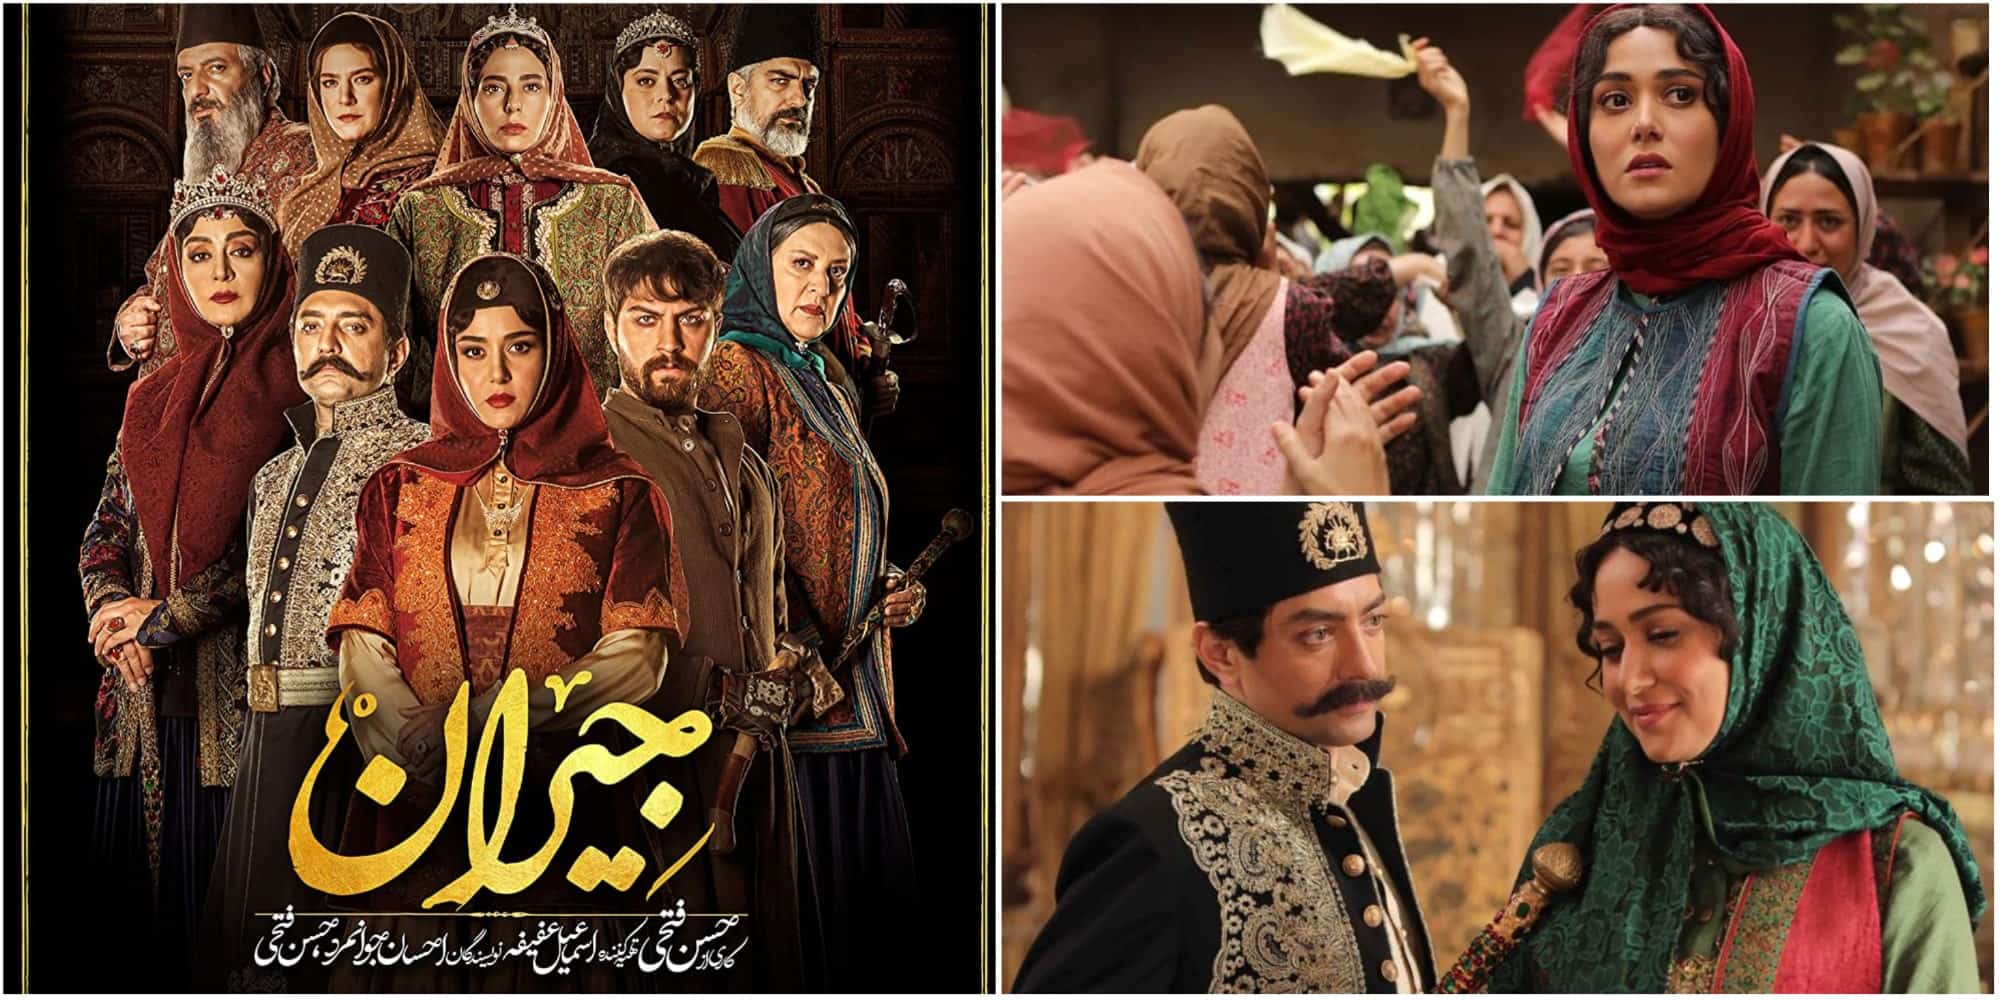 Jeyran Iranian Historical Drama Episode 48 Release Date